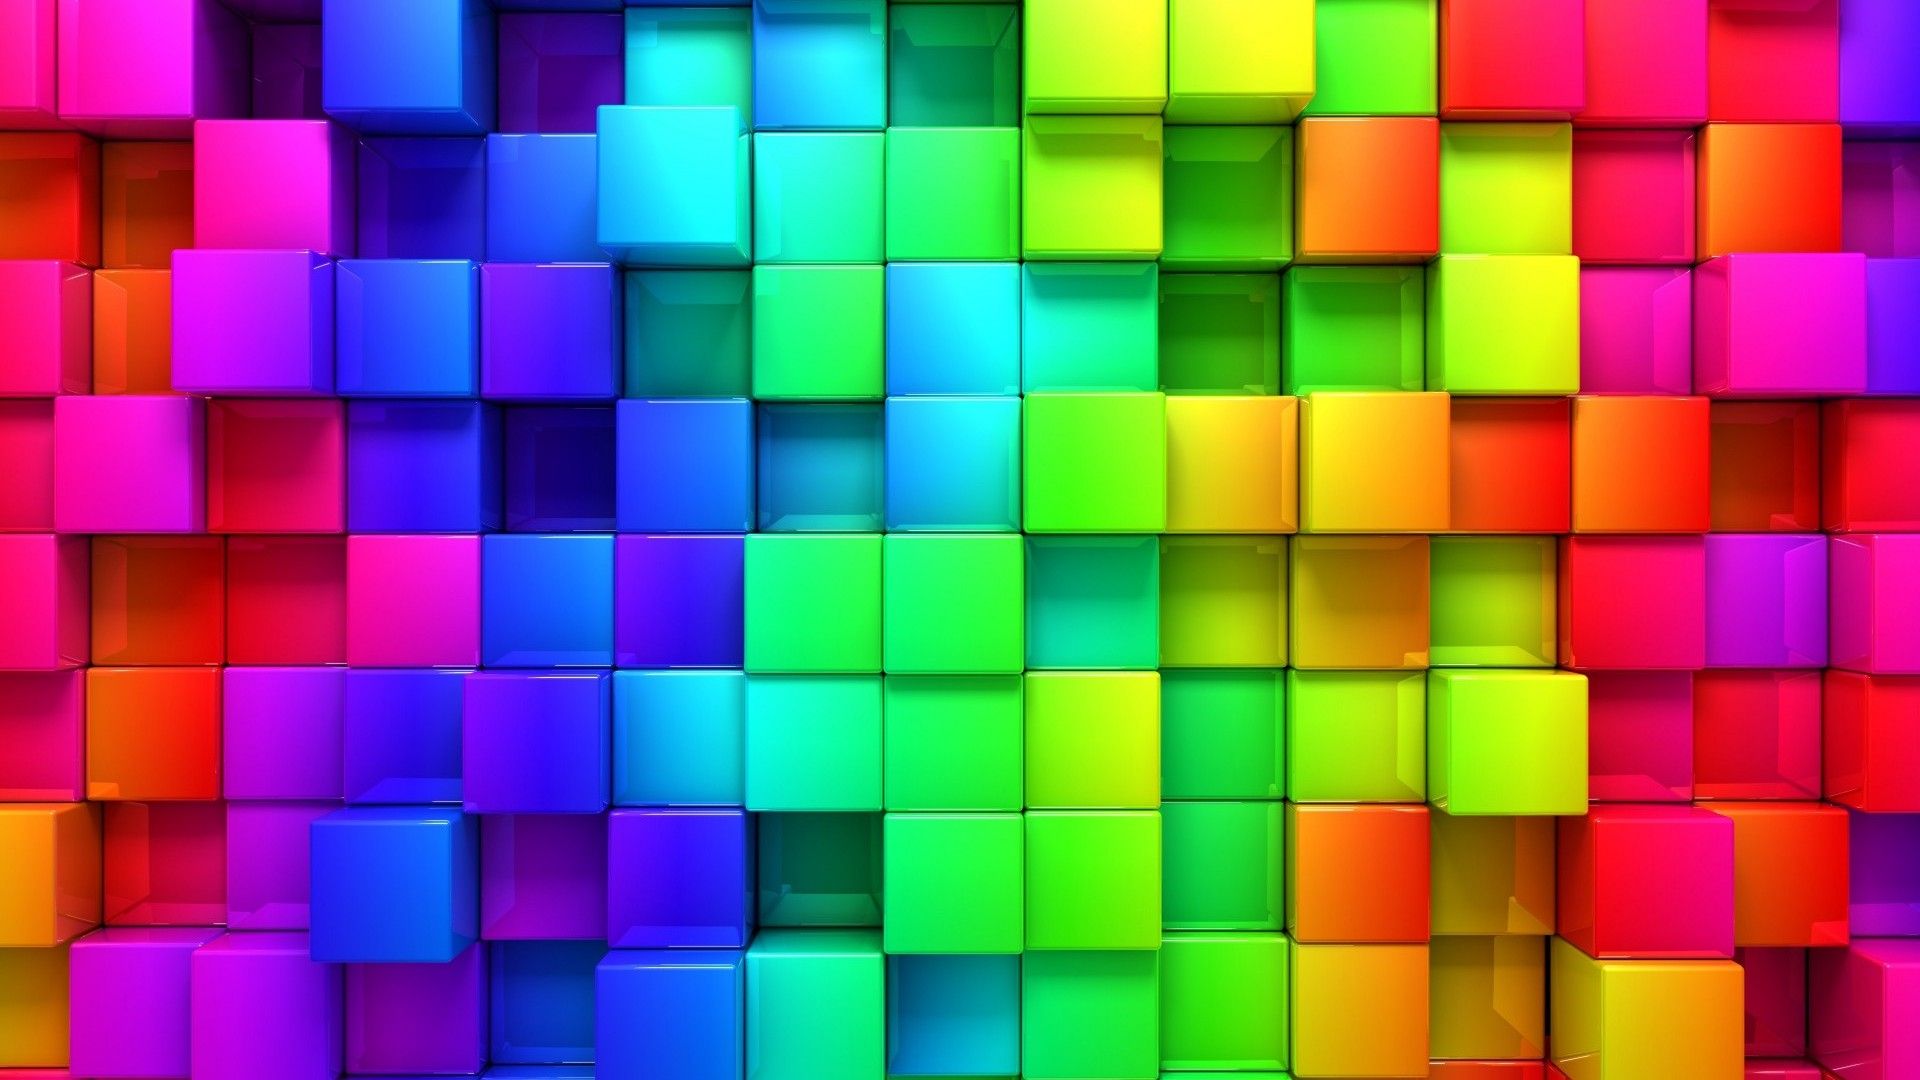 Fondos de pantalla de colores - FondosMil